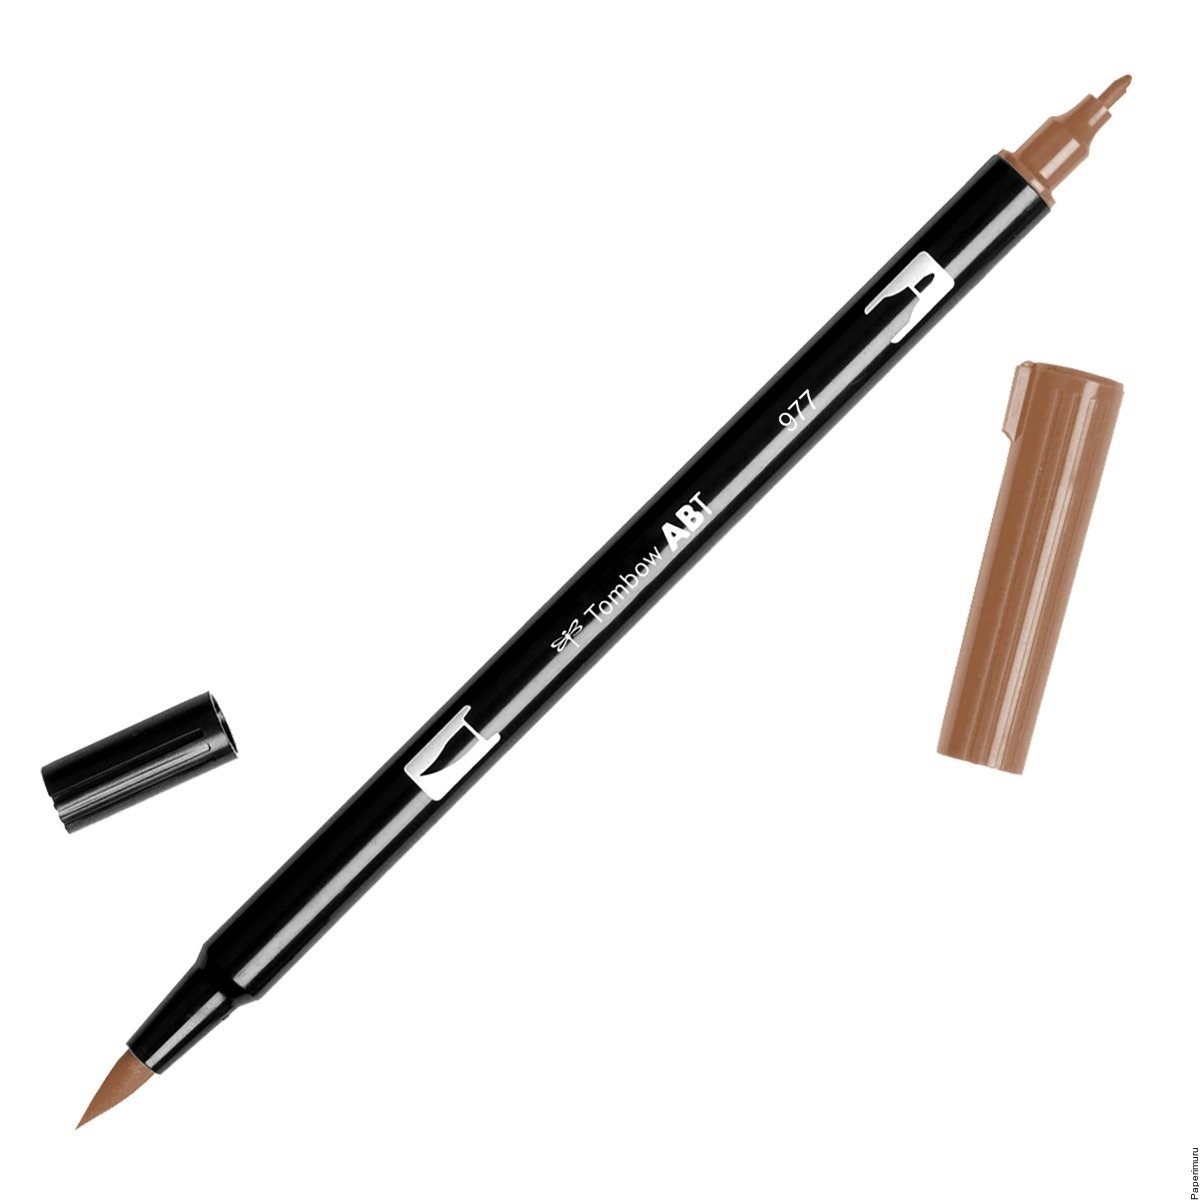 Dual Brush Pen - 977 Saddle Brown